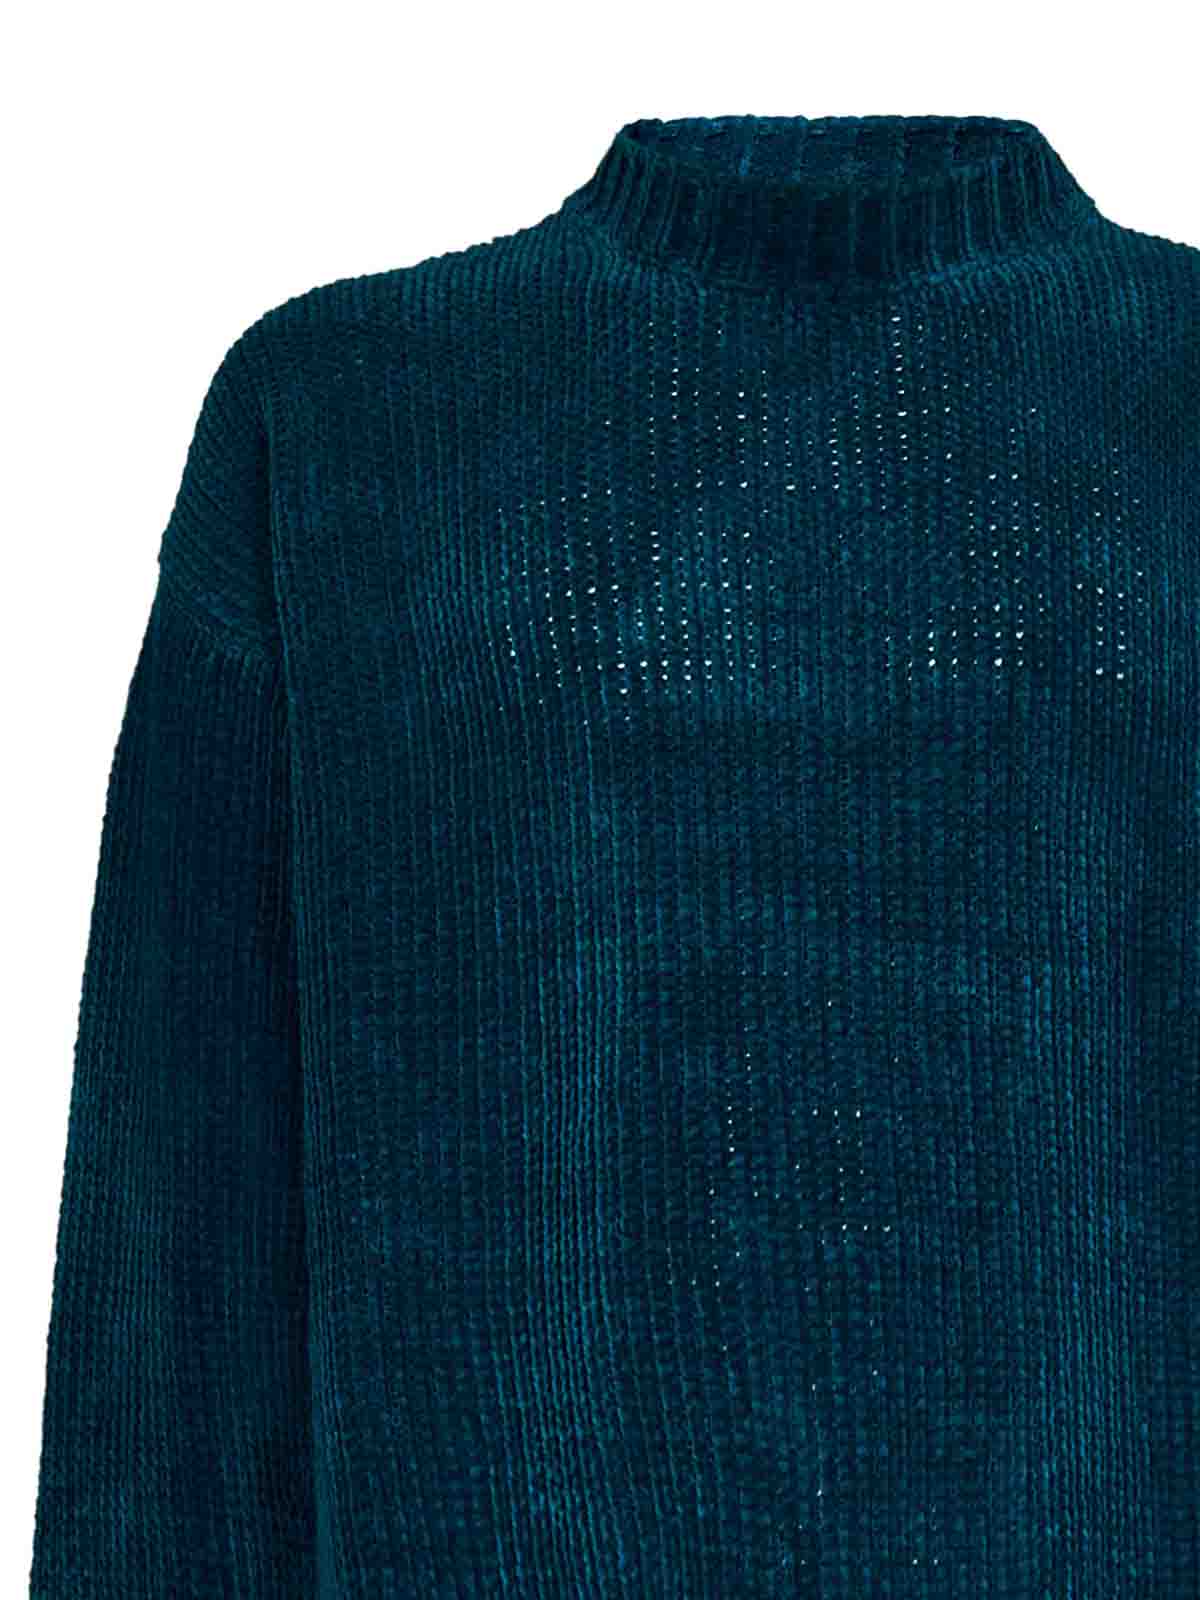 Shop Bonsai Blue Knit Pullover